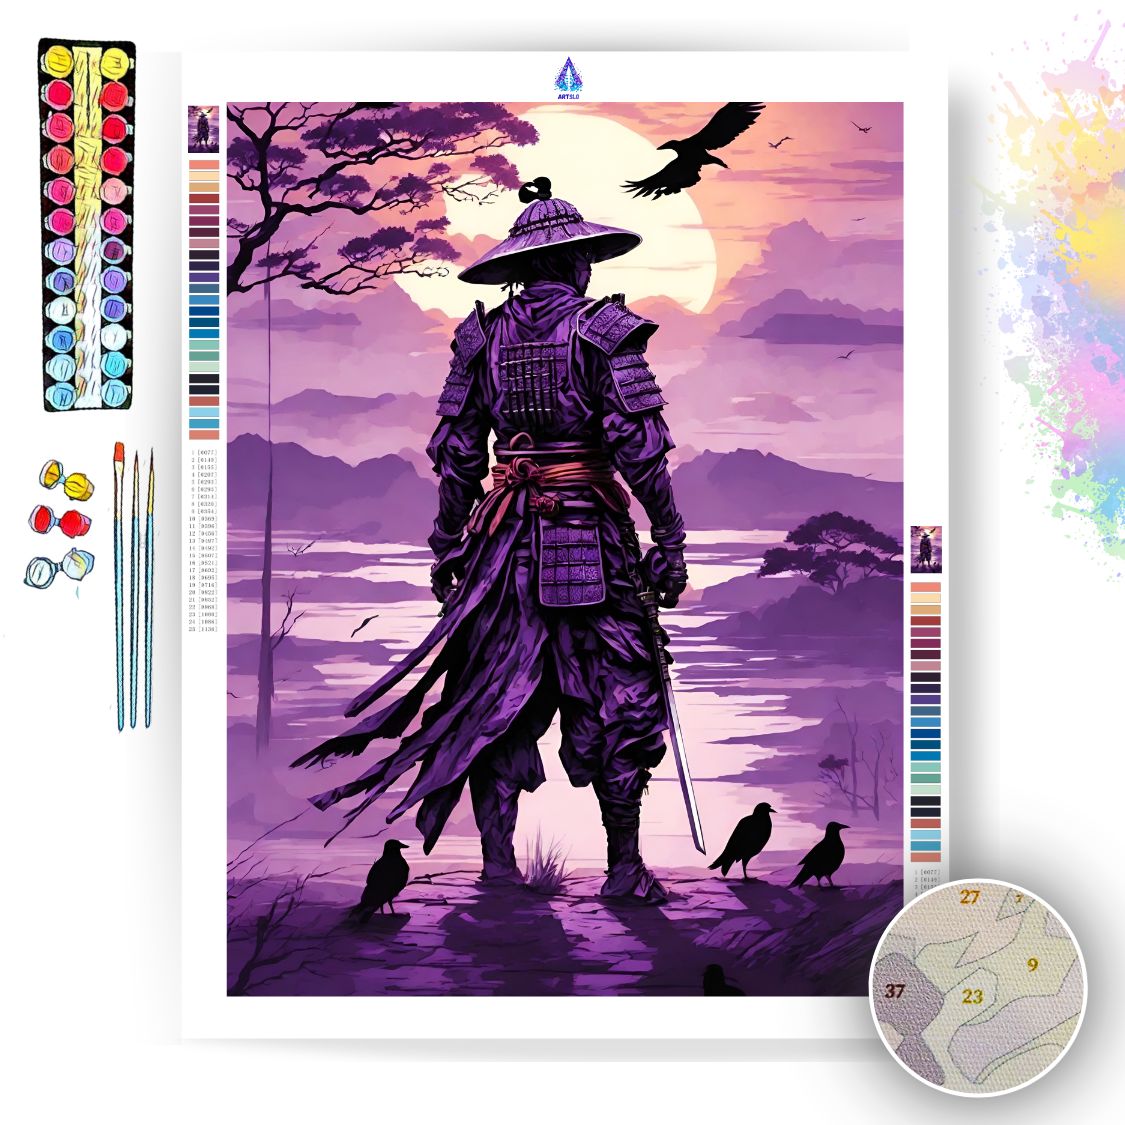 Samurai Serenity - Paint by Numbers - Artslo.com